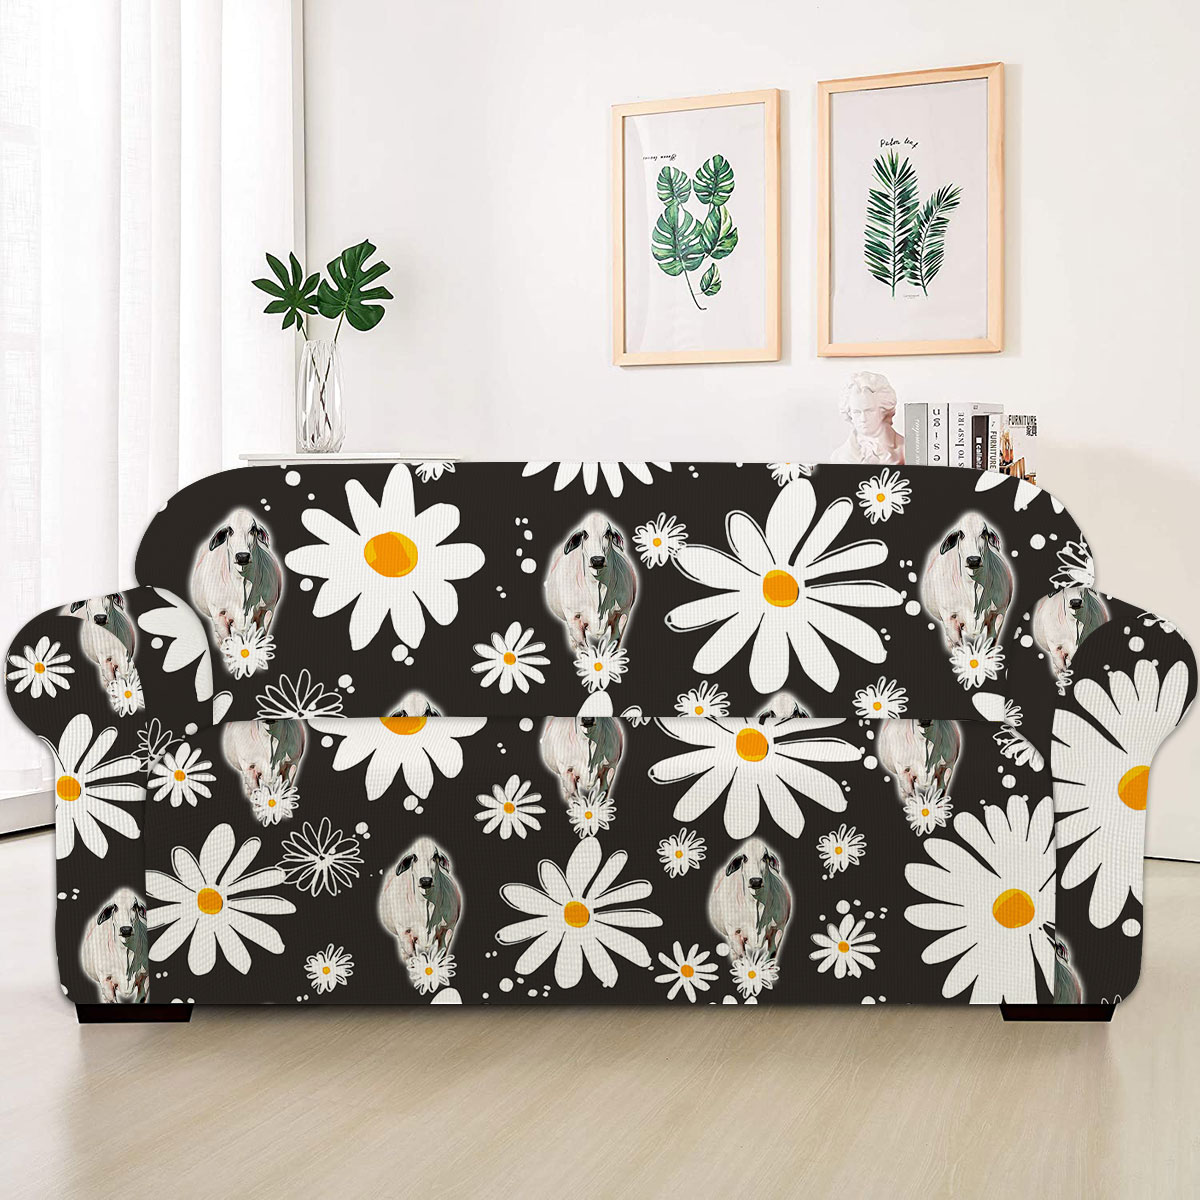 Brahman Daisy Flower Pattern Sofa Cover